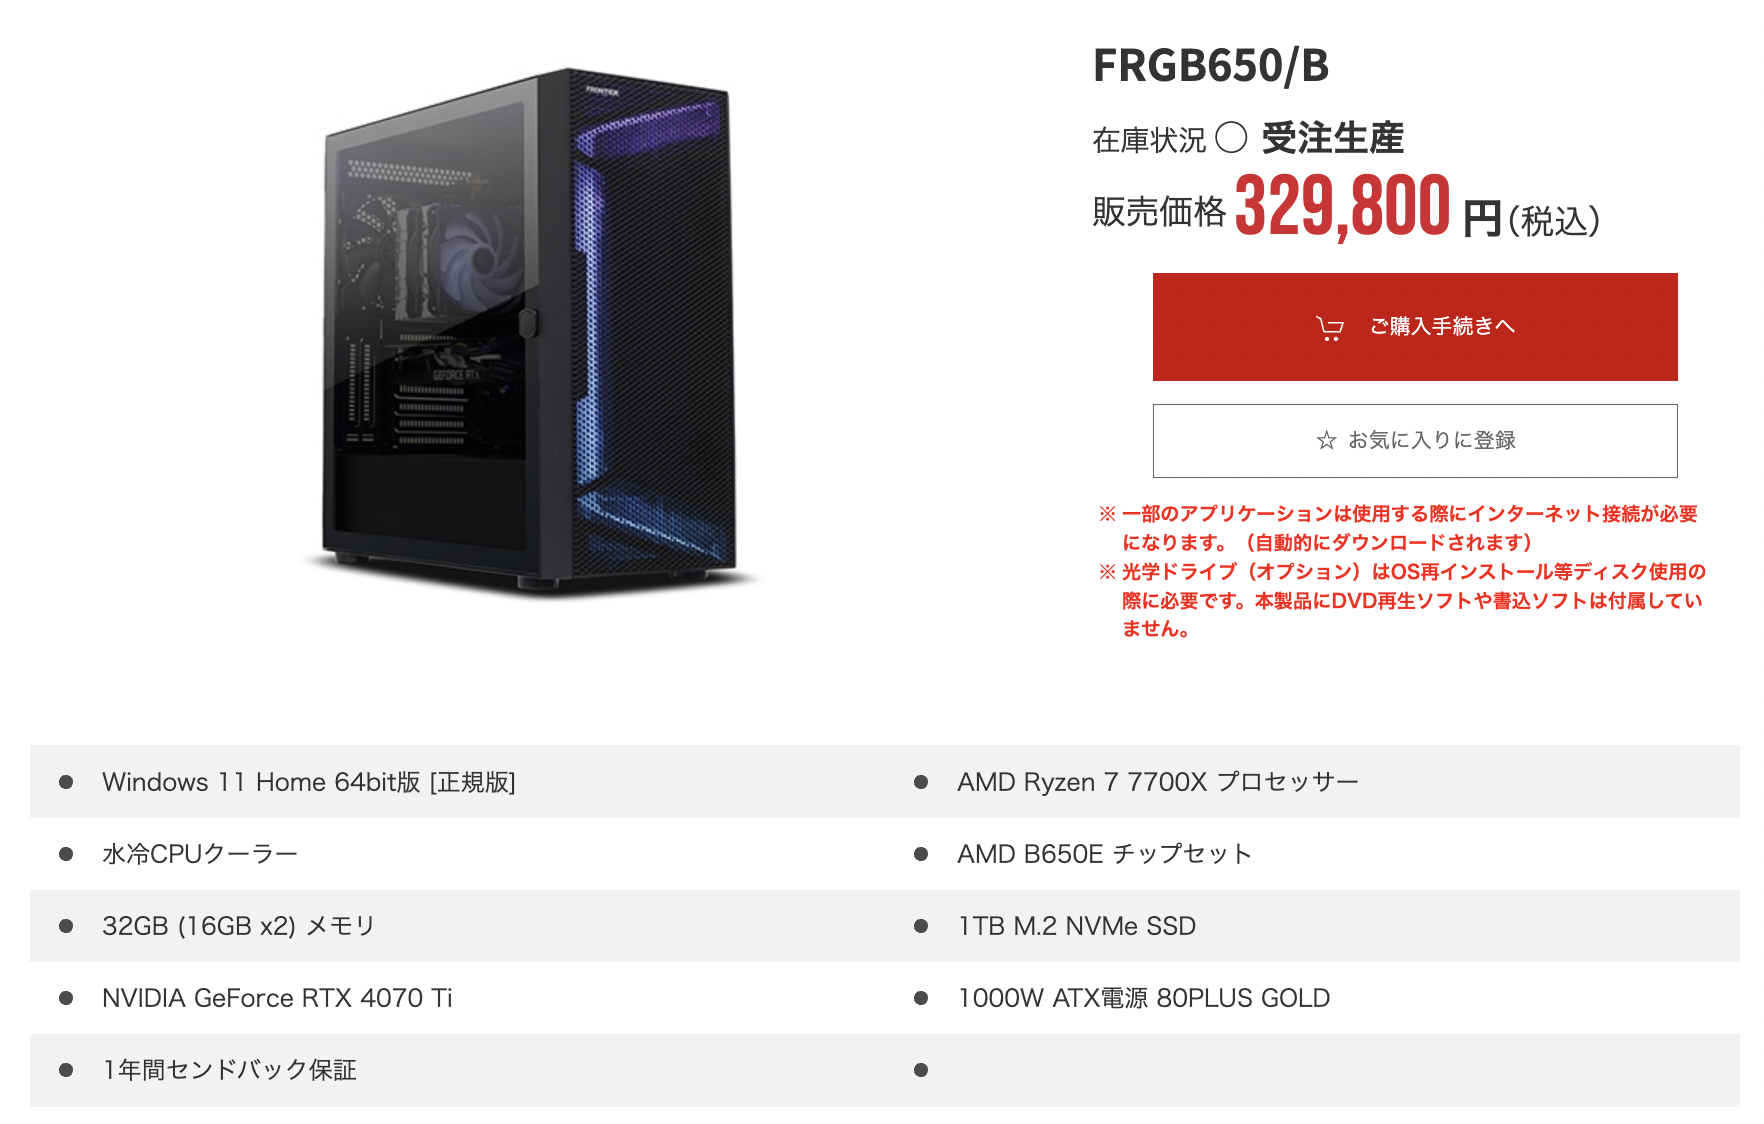 FRGB650/B